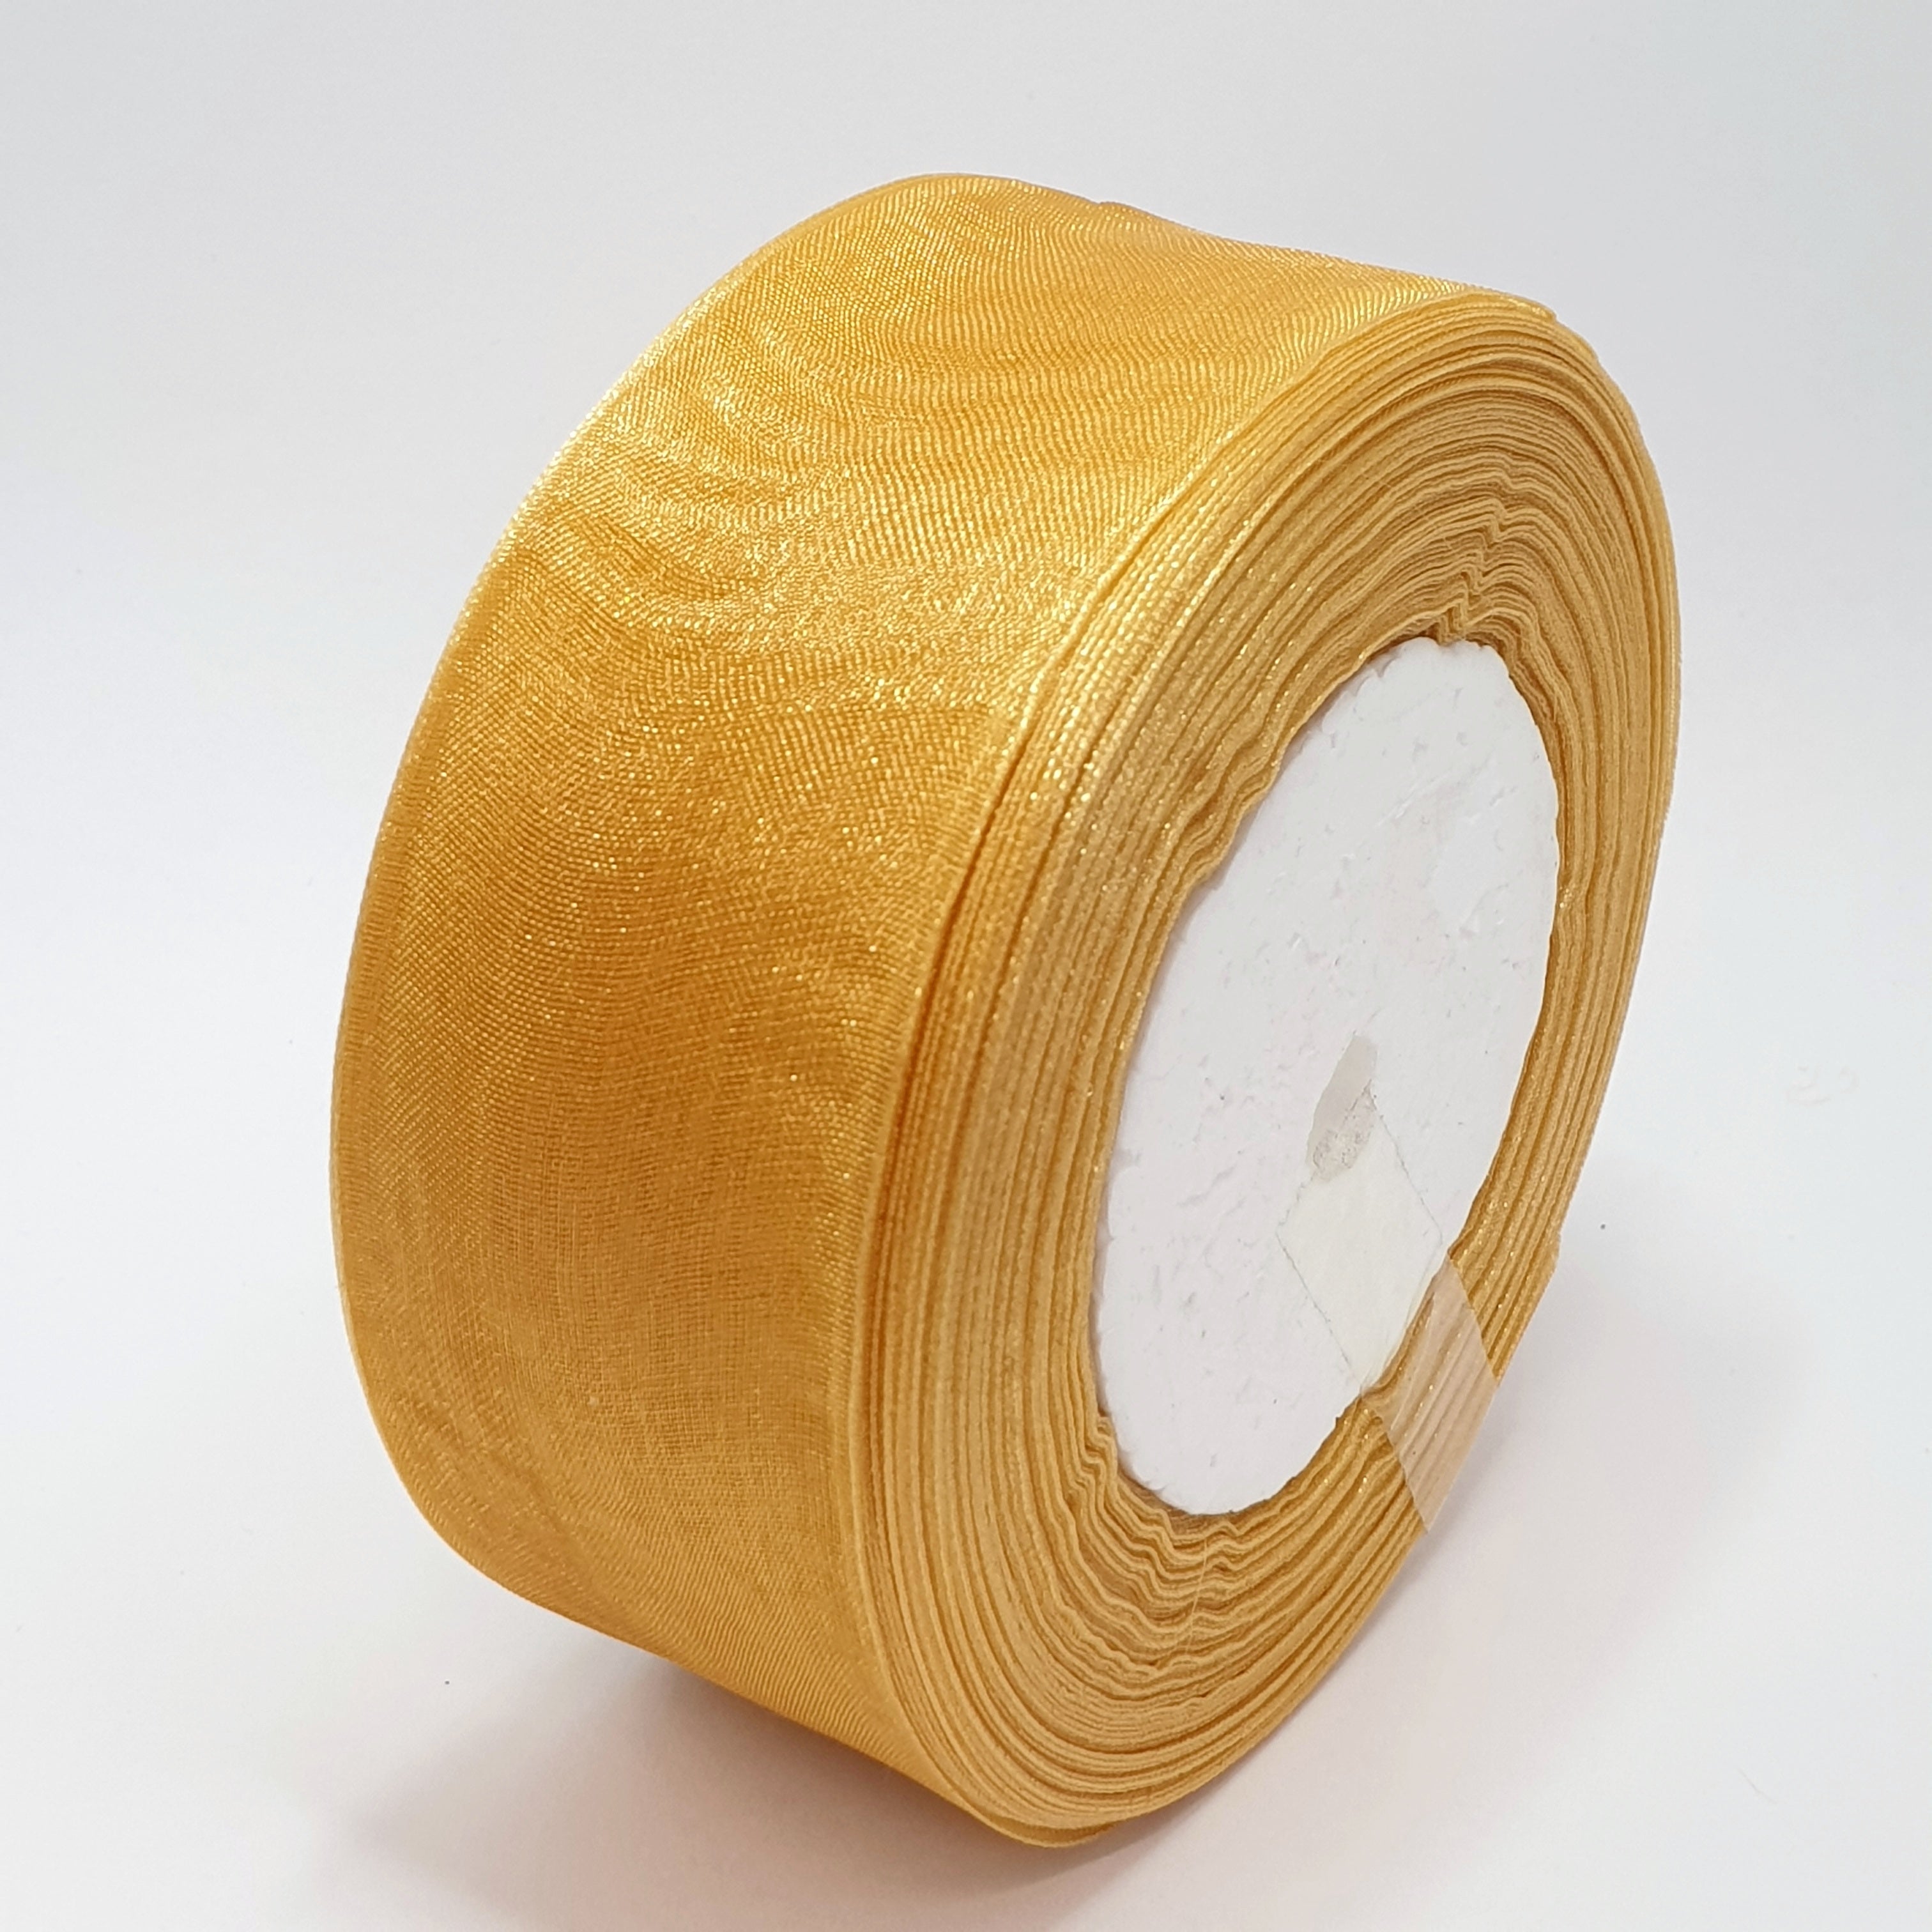 MajorCrafts 40mm 45metres Golden Brown Sheer Organza Fabric Ribbon Roll BK35